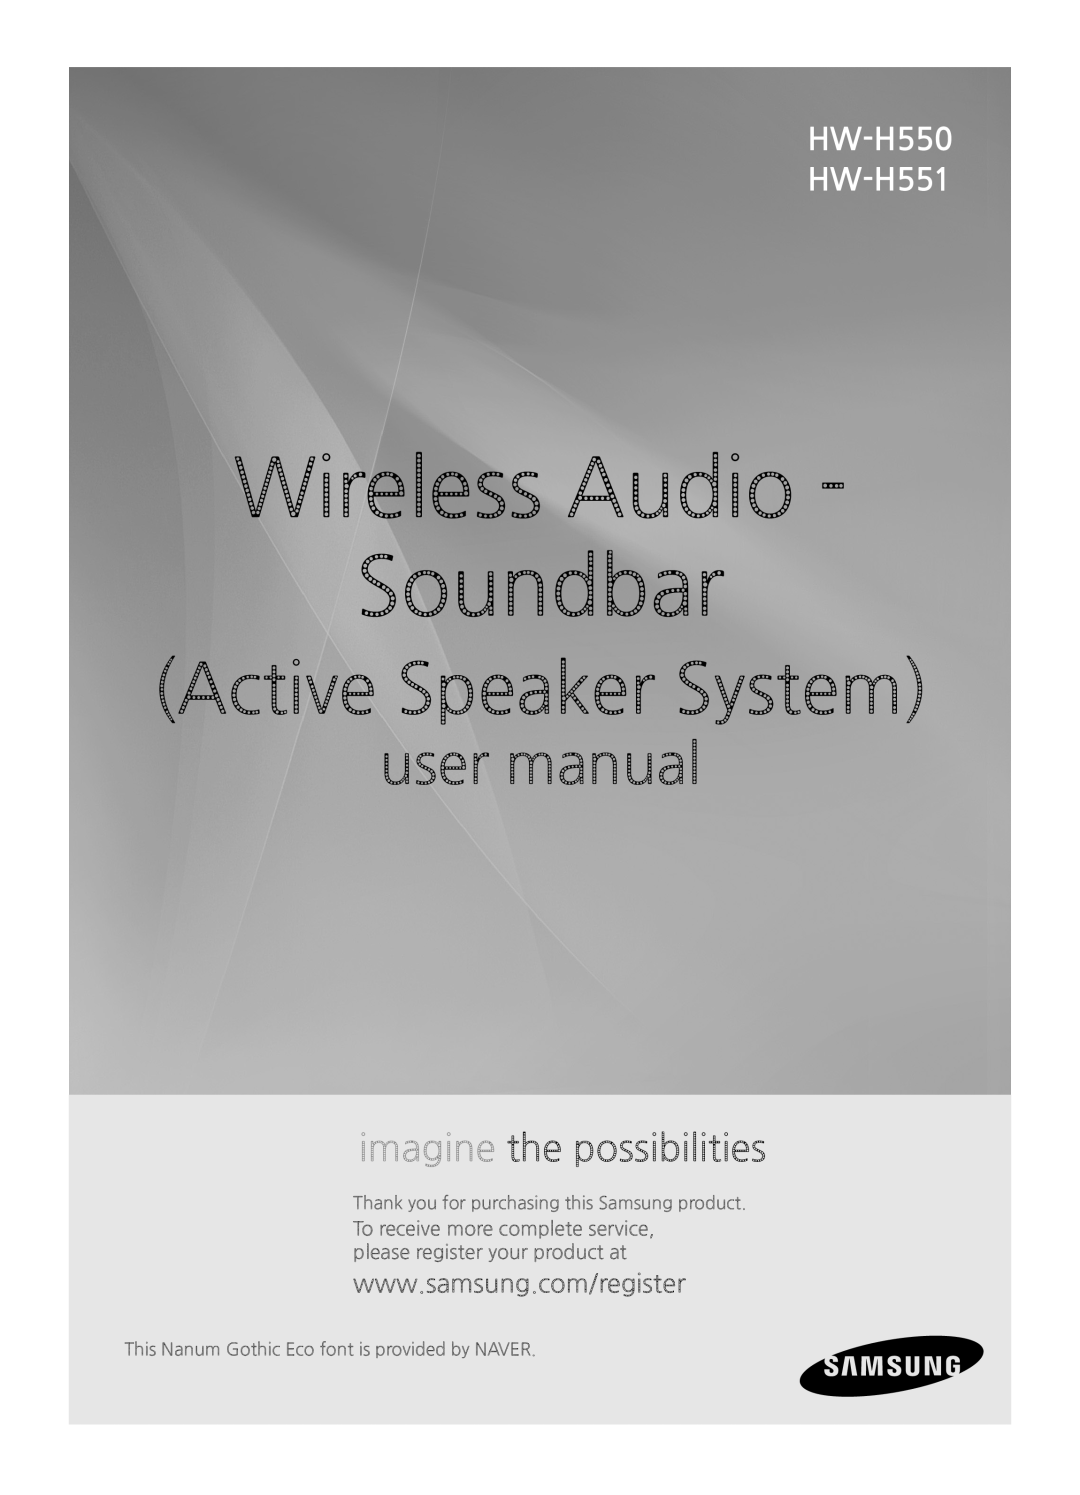 Samsung HWH551 user manual Wireless Audio Soundbar, Active Speaker System, imagine the possibilities, HW-H550 HW-H551 